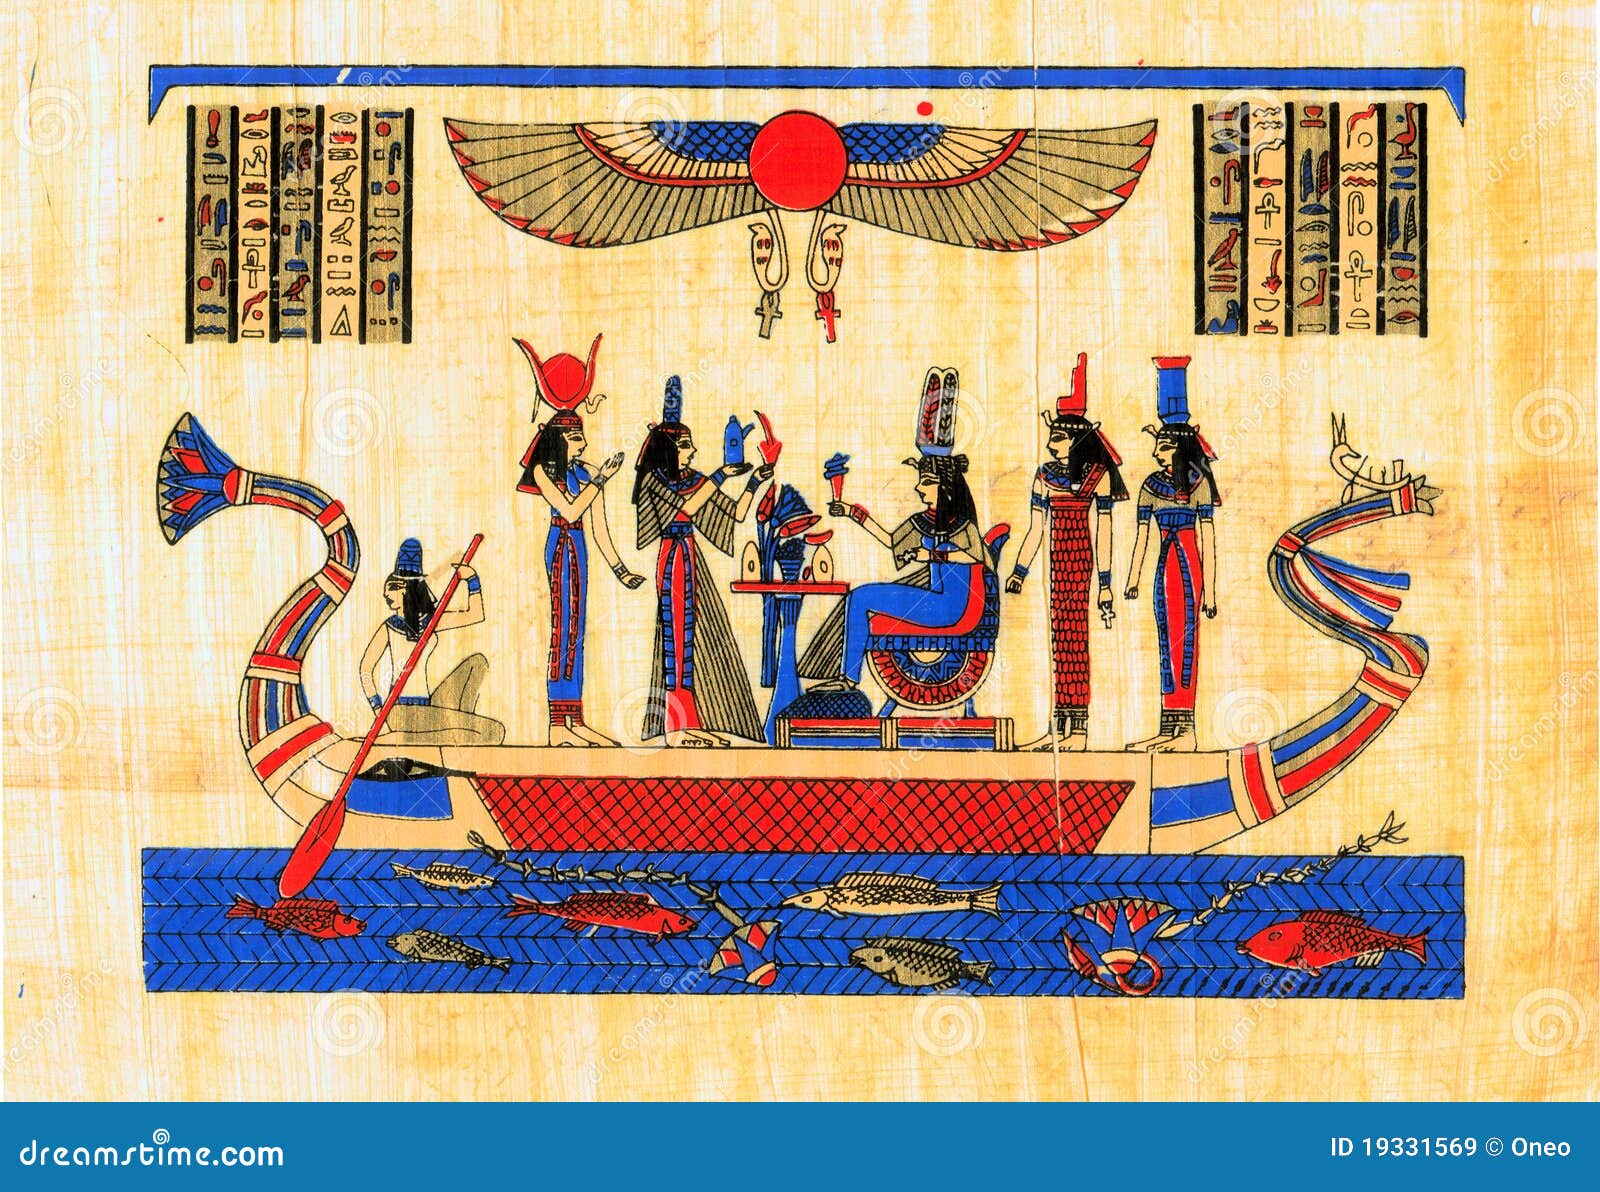 EGYPTIAN GODS A-Z LIST